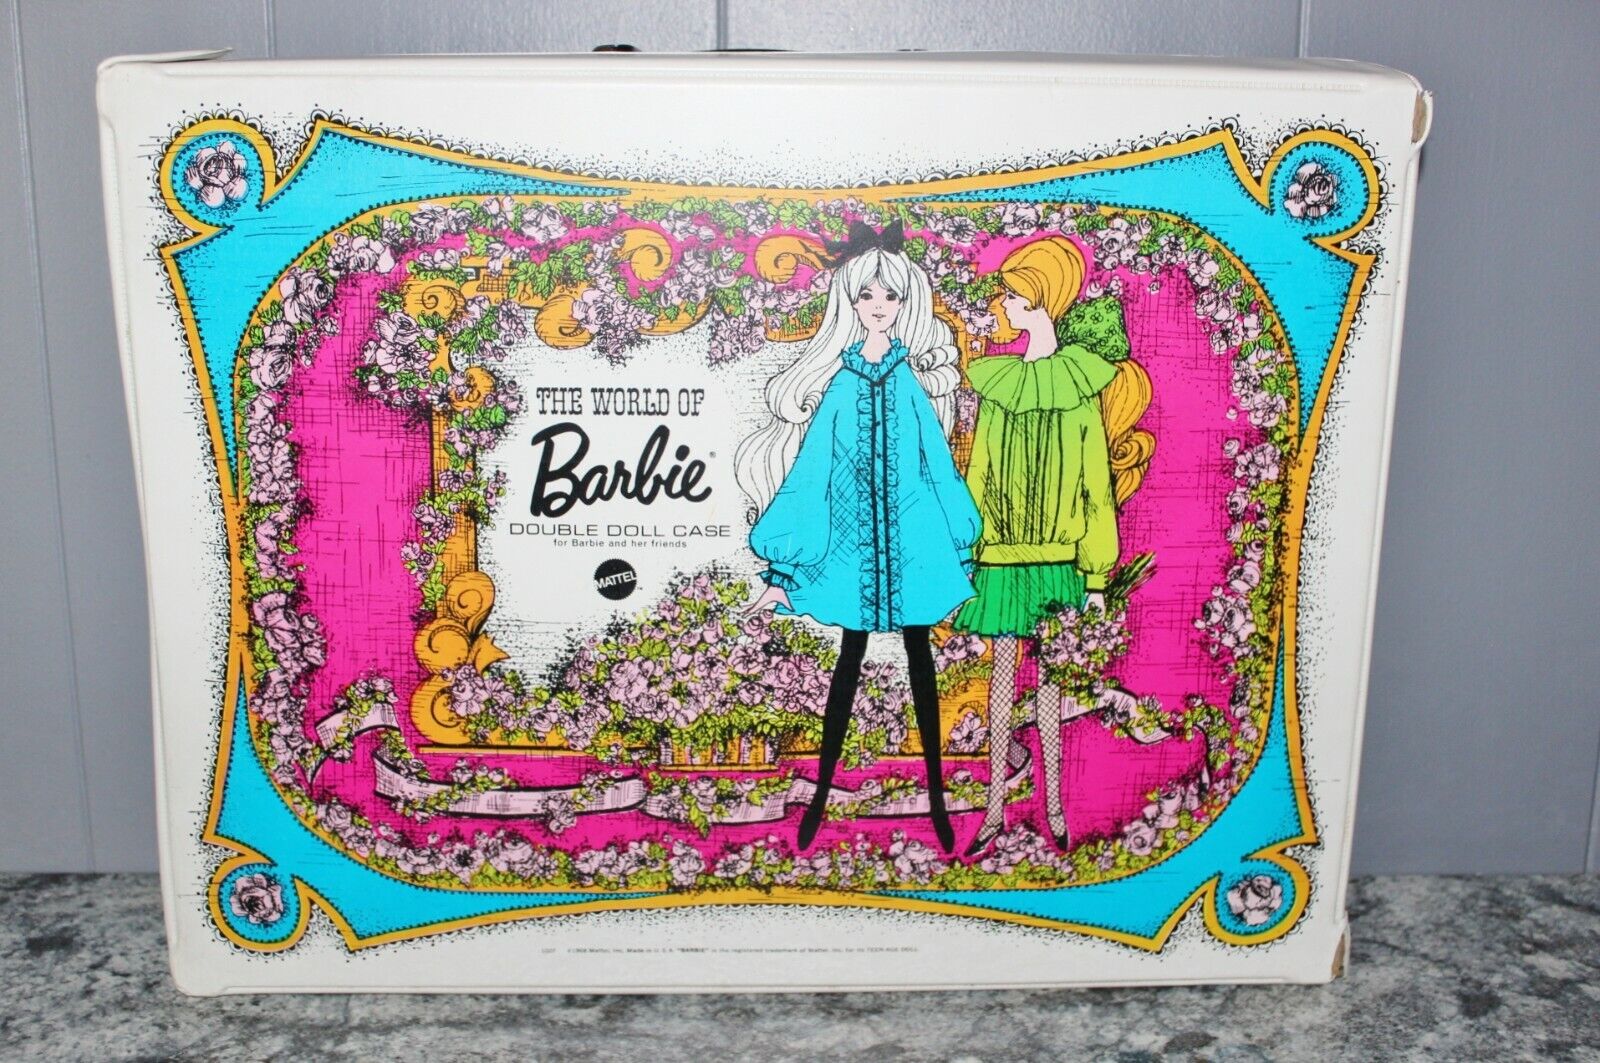 Vintage 1968 Mattel The World of Barbie Doll Case Pink No 1002 10x3x12 for sale online